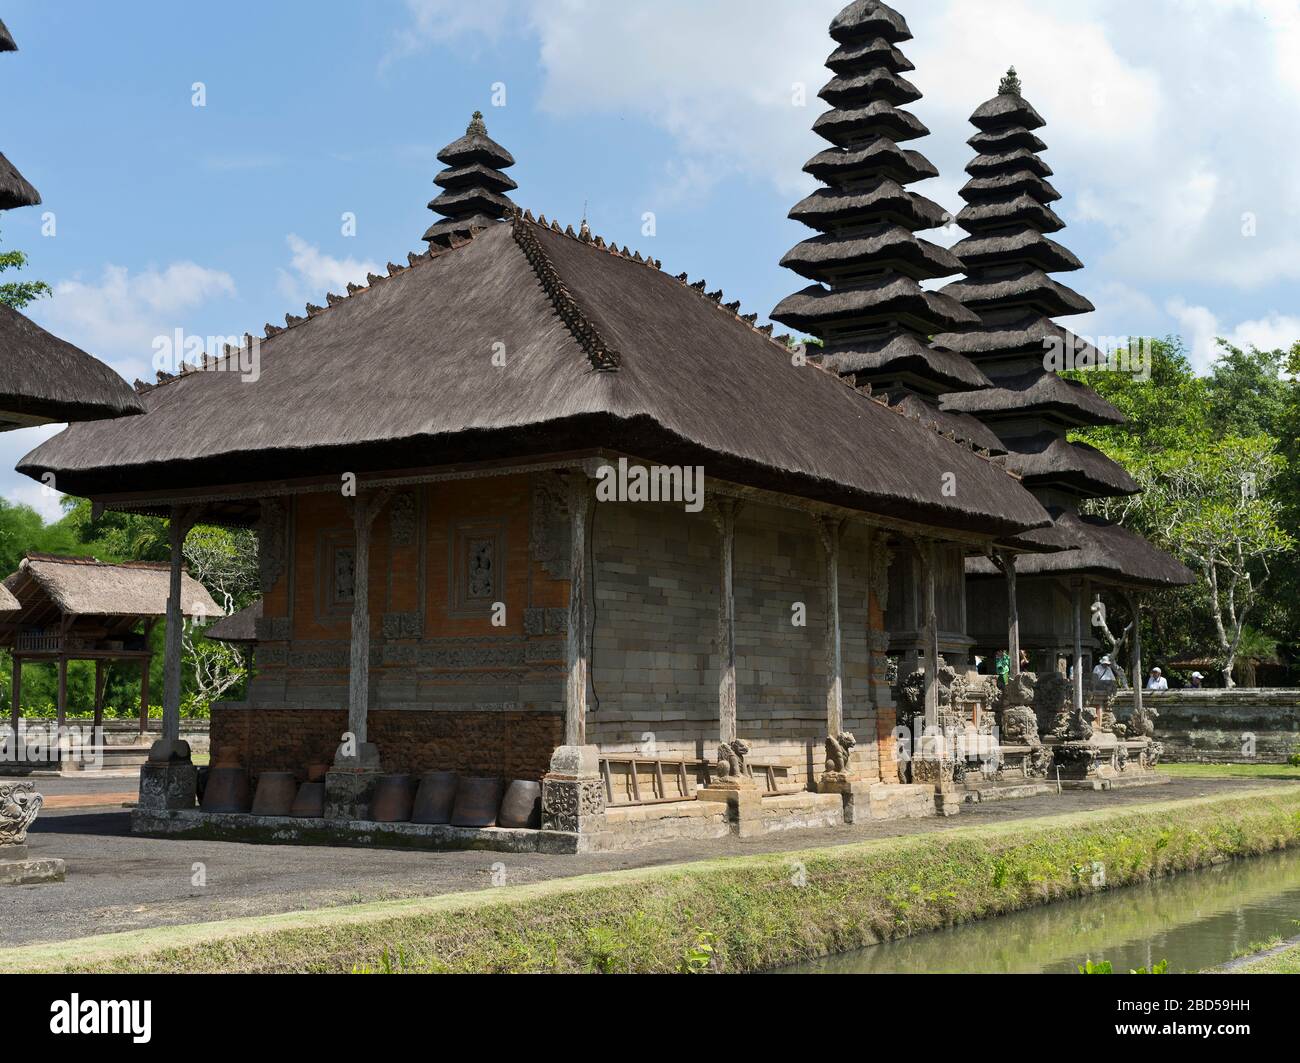 tempio reale di dh pura Taman Ayun BALI INDONESIA Indù Balinese Templi Mengwi interno Sanctum pelinggih meru torri architettura asia Foto Stock